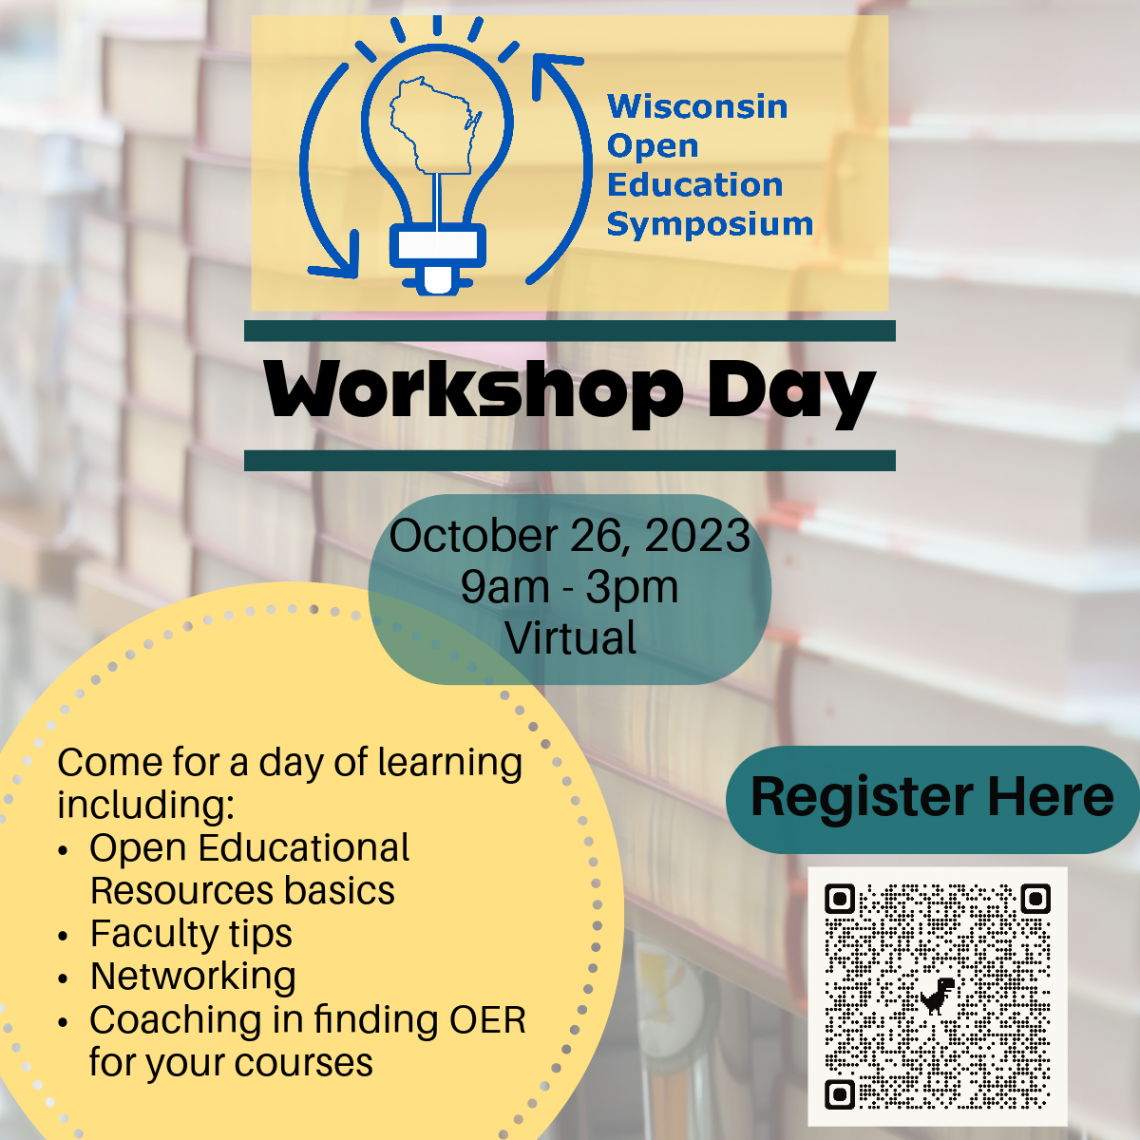 Virtual Workshop Day for October 26, 2023. Register using the Symposium Registration Form.